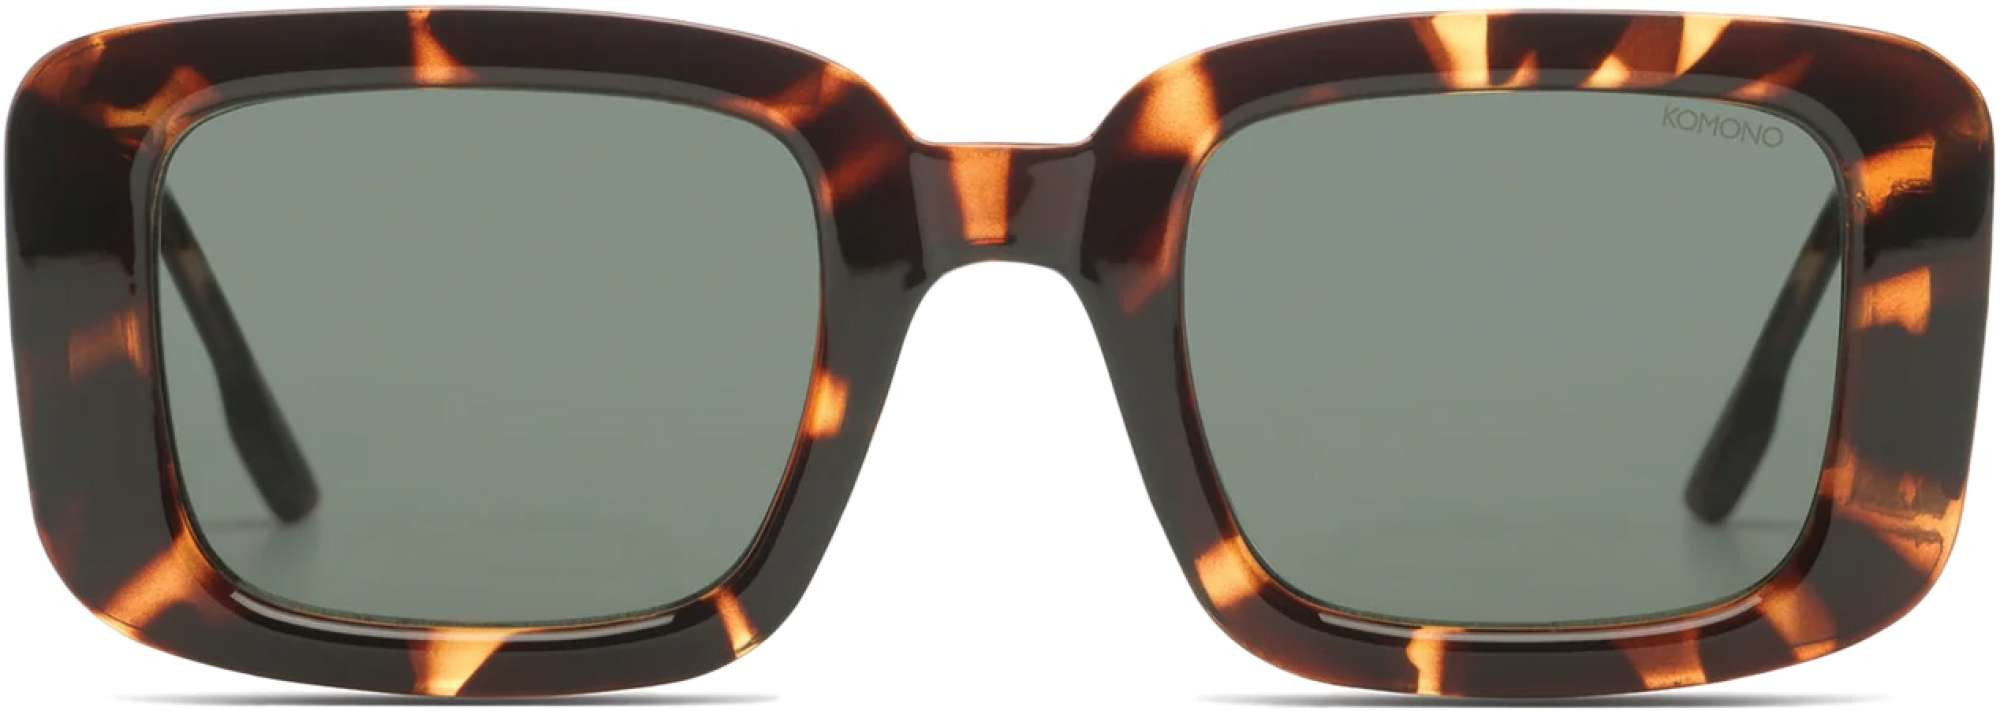 Afbeelding van Komono Avery havana sunglasses